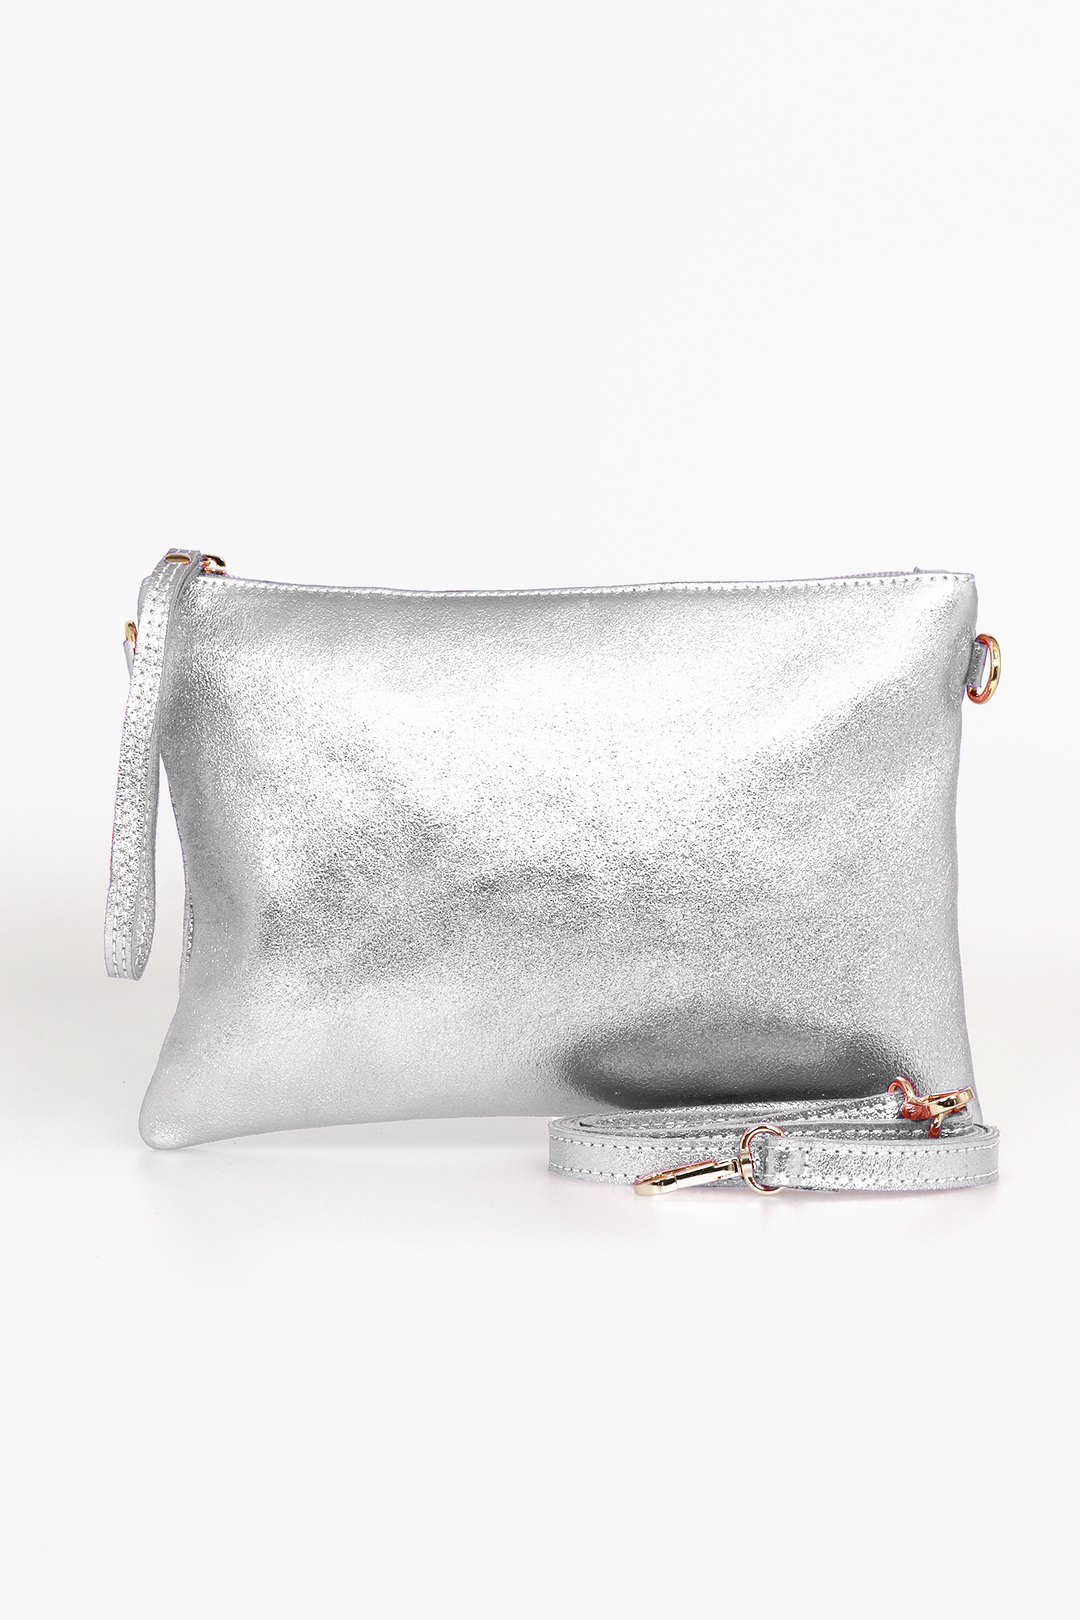 Silver Large Leather Wristlet Clutch Bag